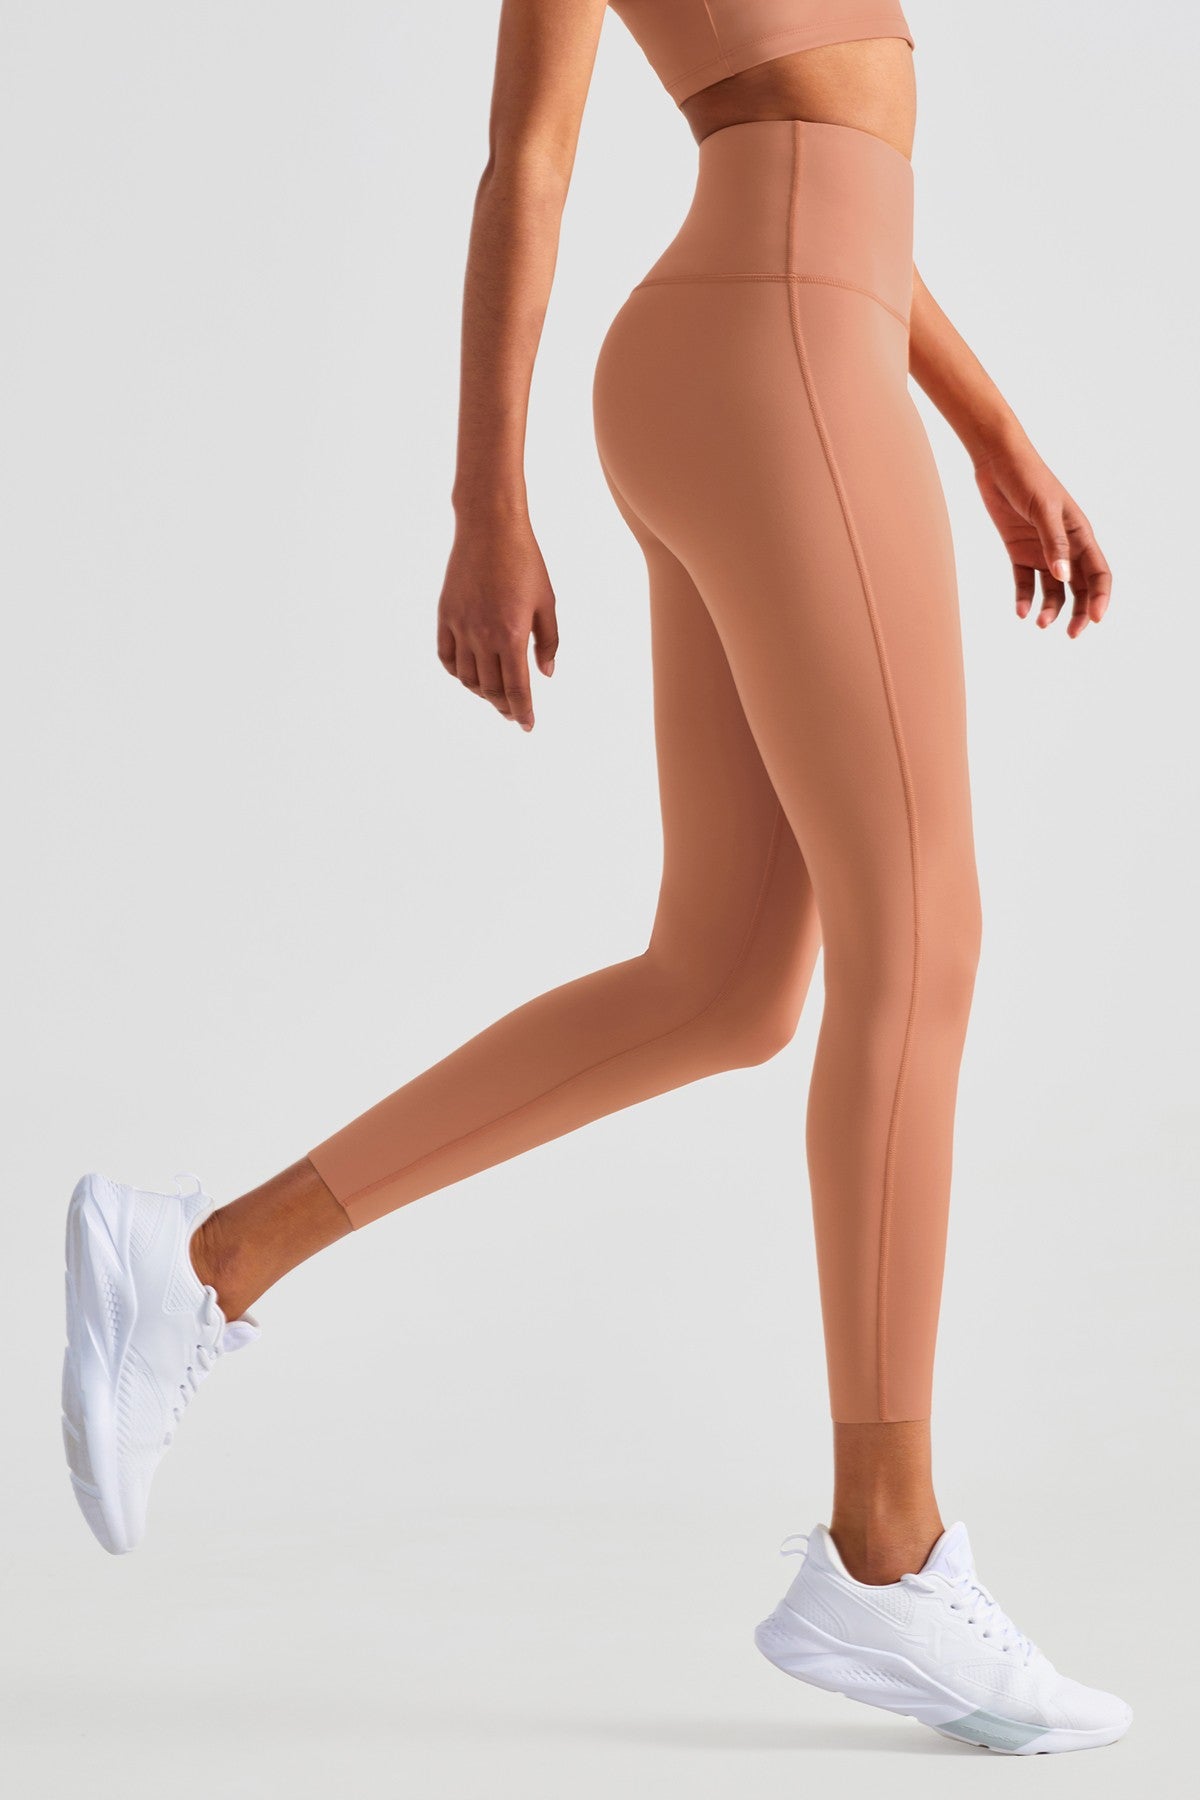 RUUHEE Seamless Spaghetti Strap Yoga Set Women High Waist Short Leggings  Backless Sport Bra Two Pieces Sportswear - AliExpress